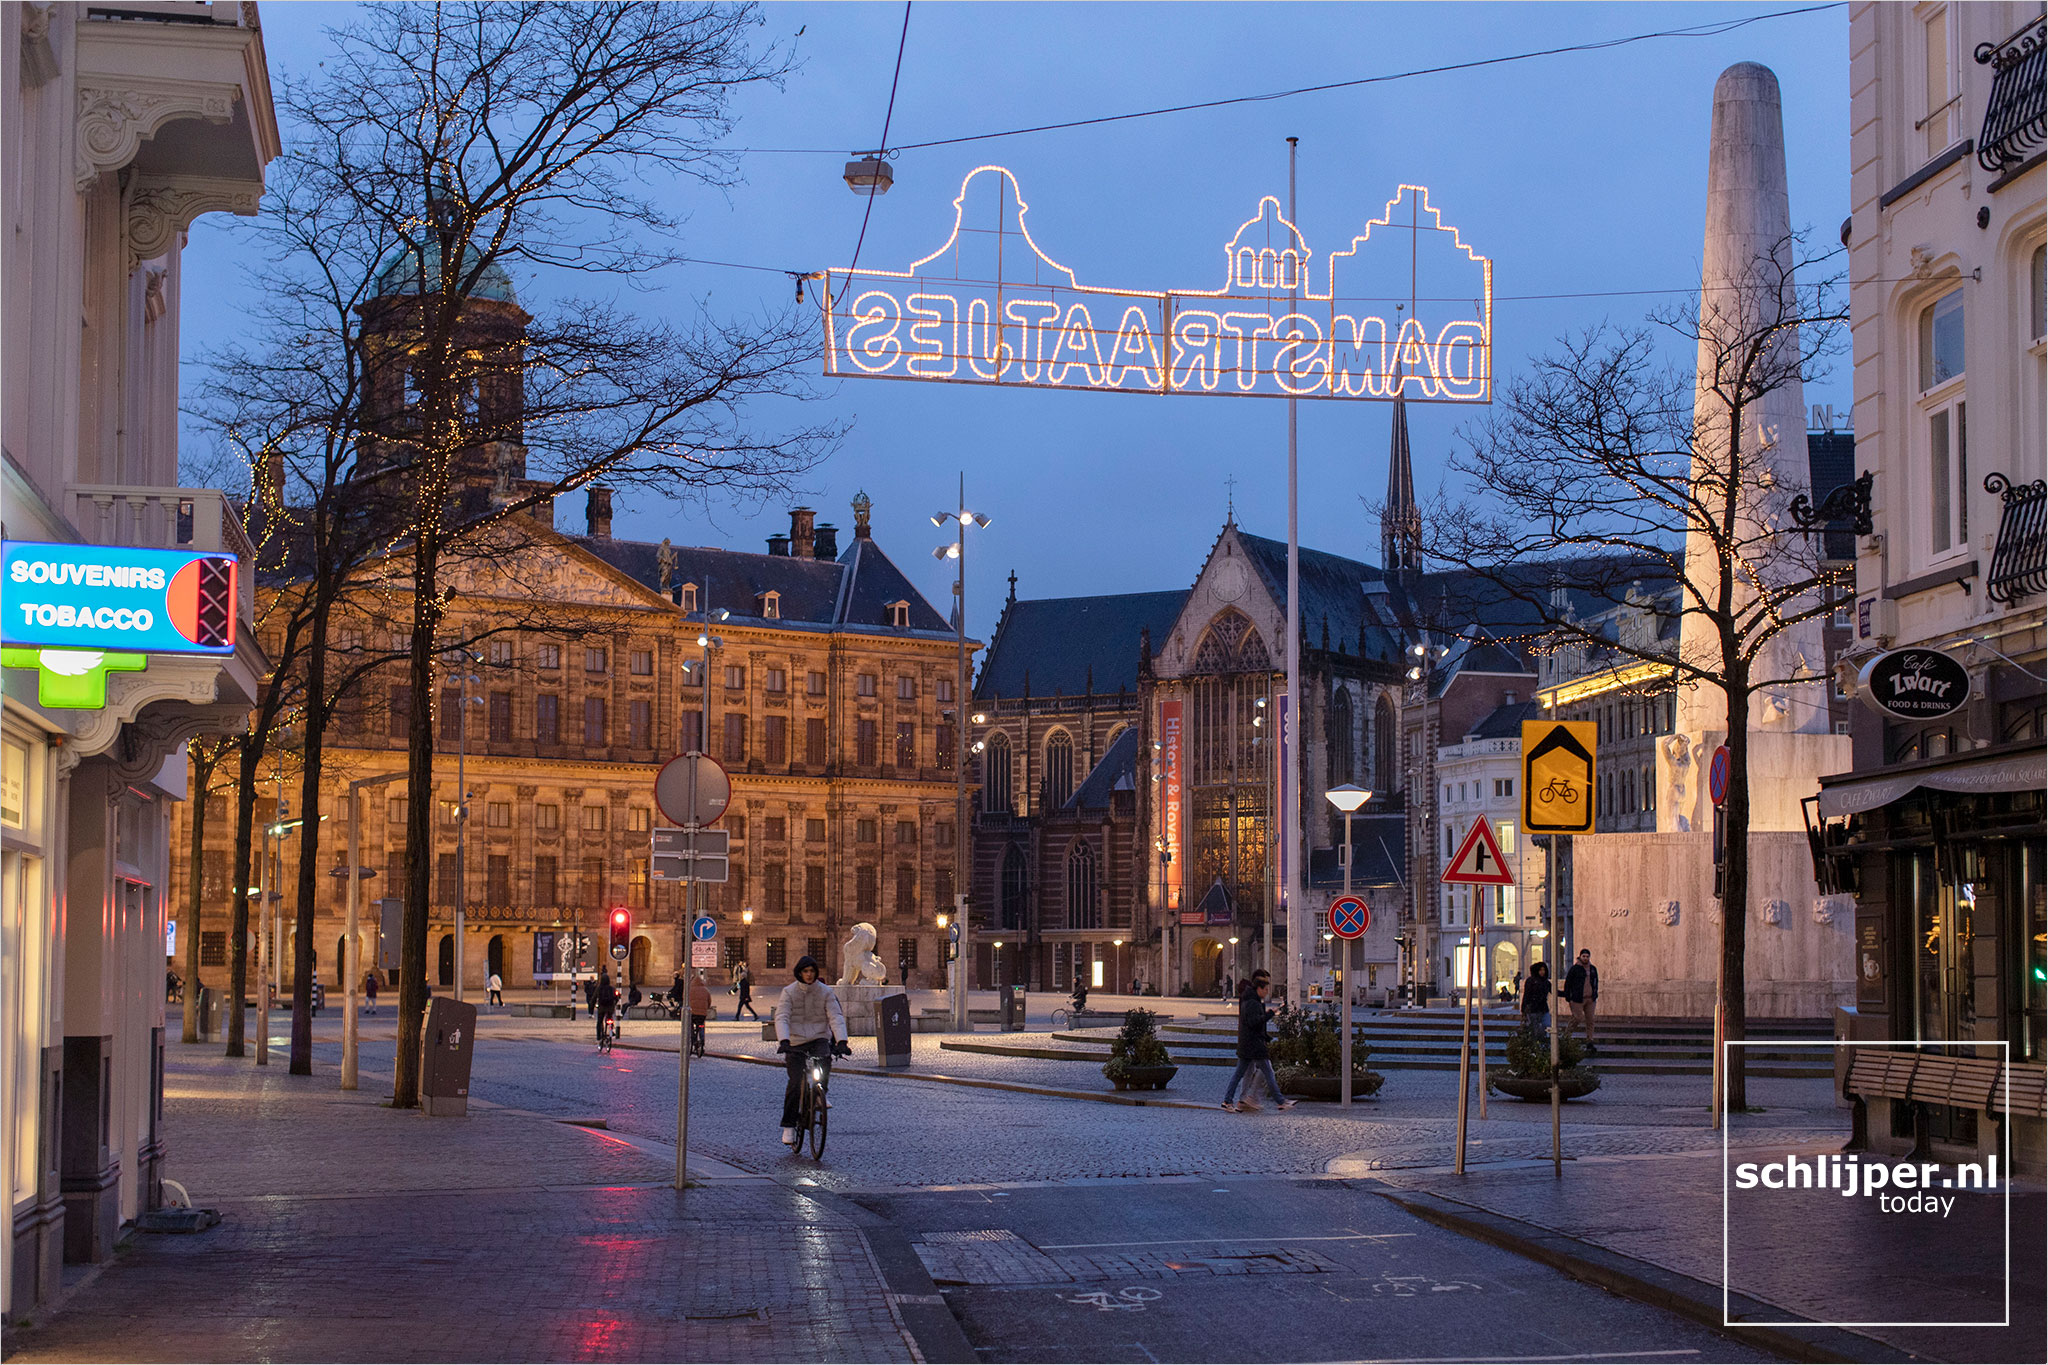 The Netherlands, Amsterdam, 25 januari 2021